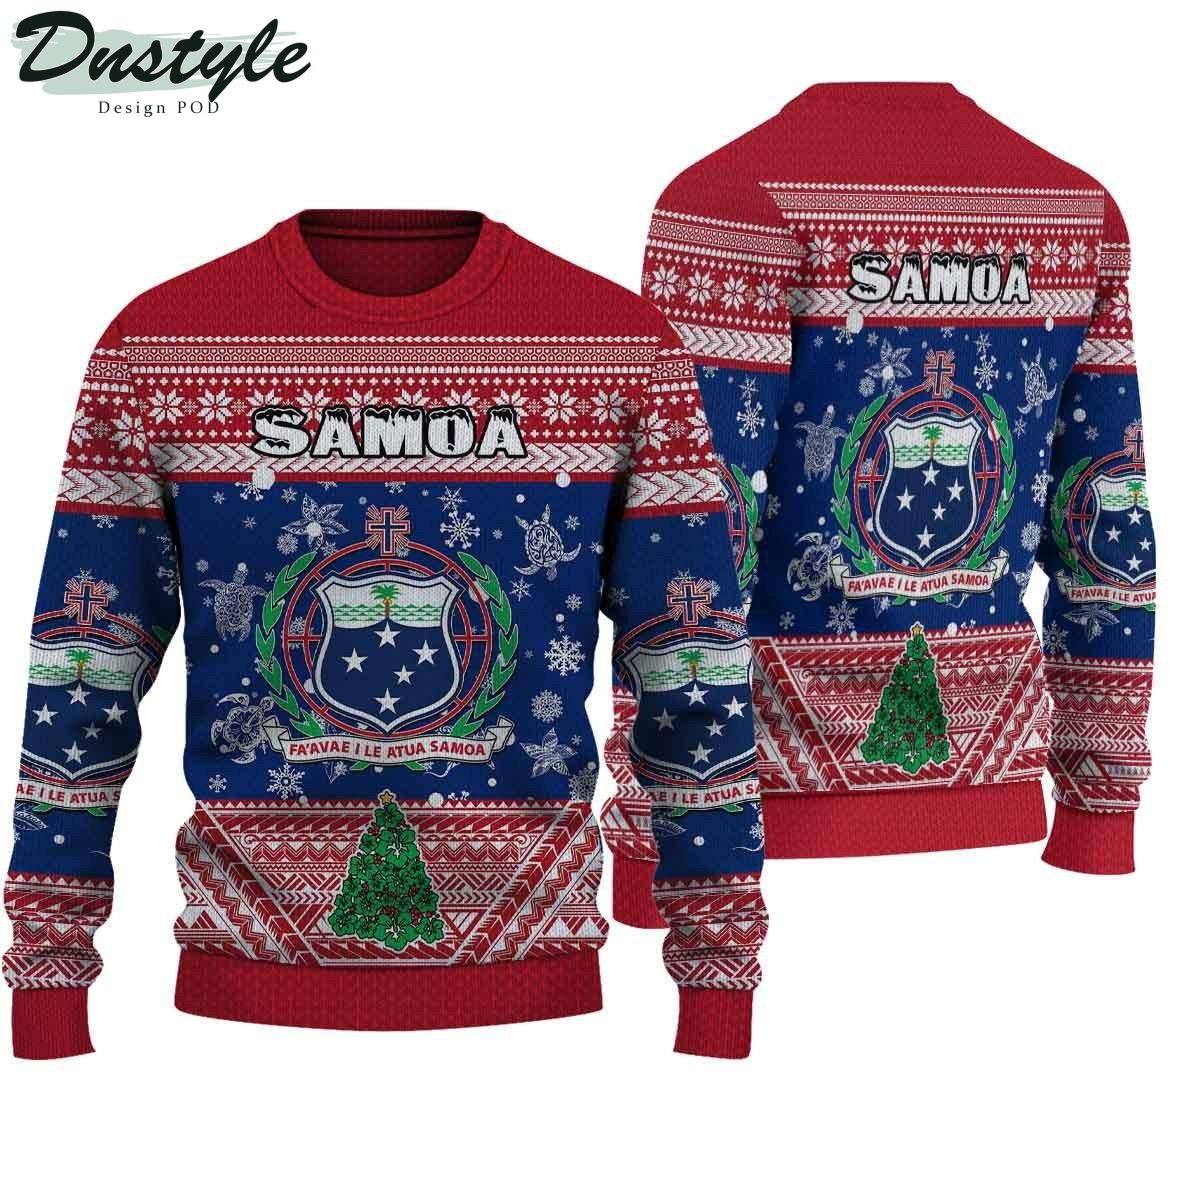 Samoa ugly christmas sweater